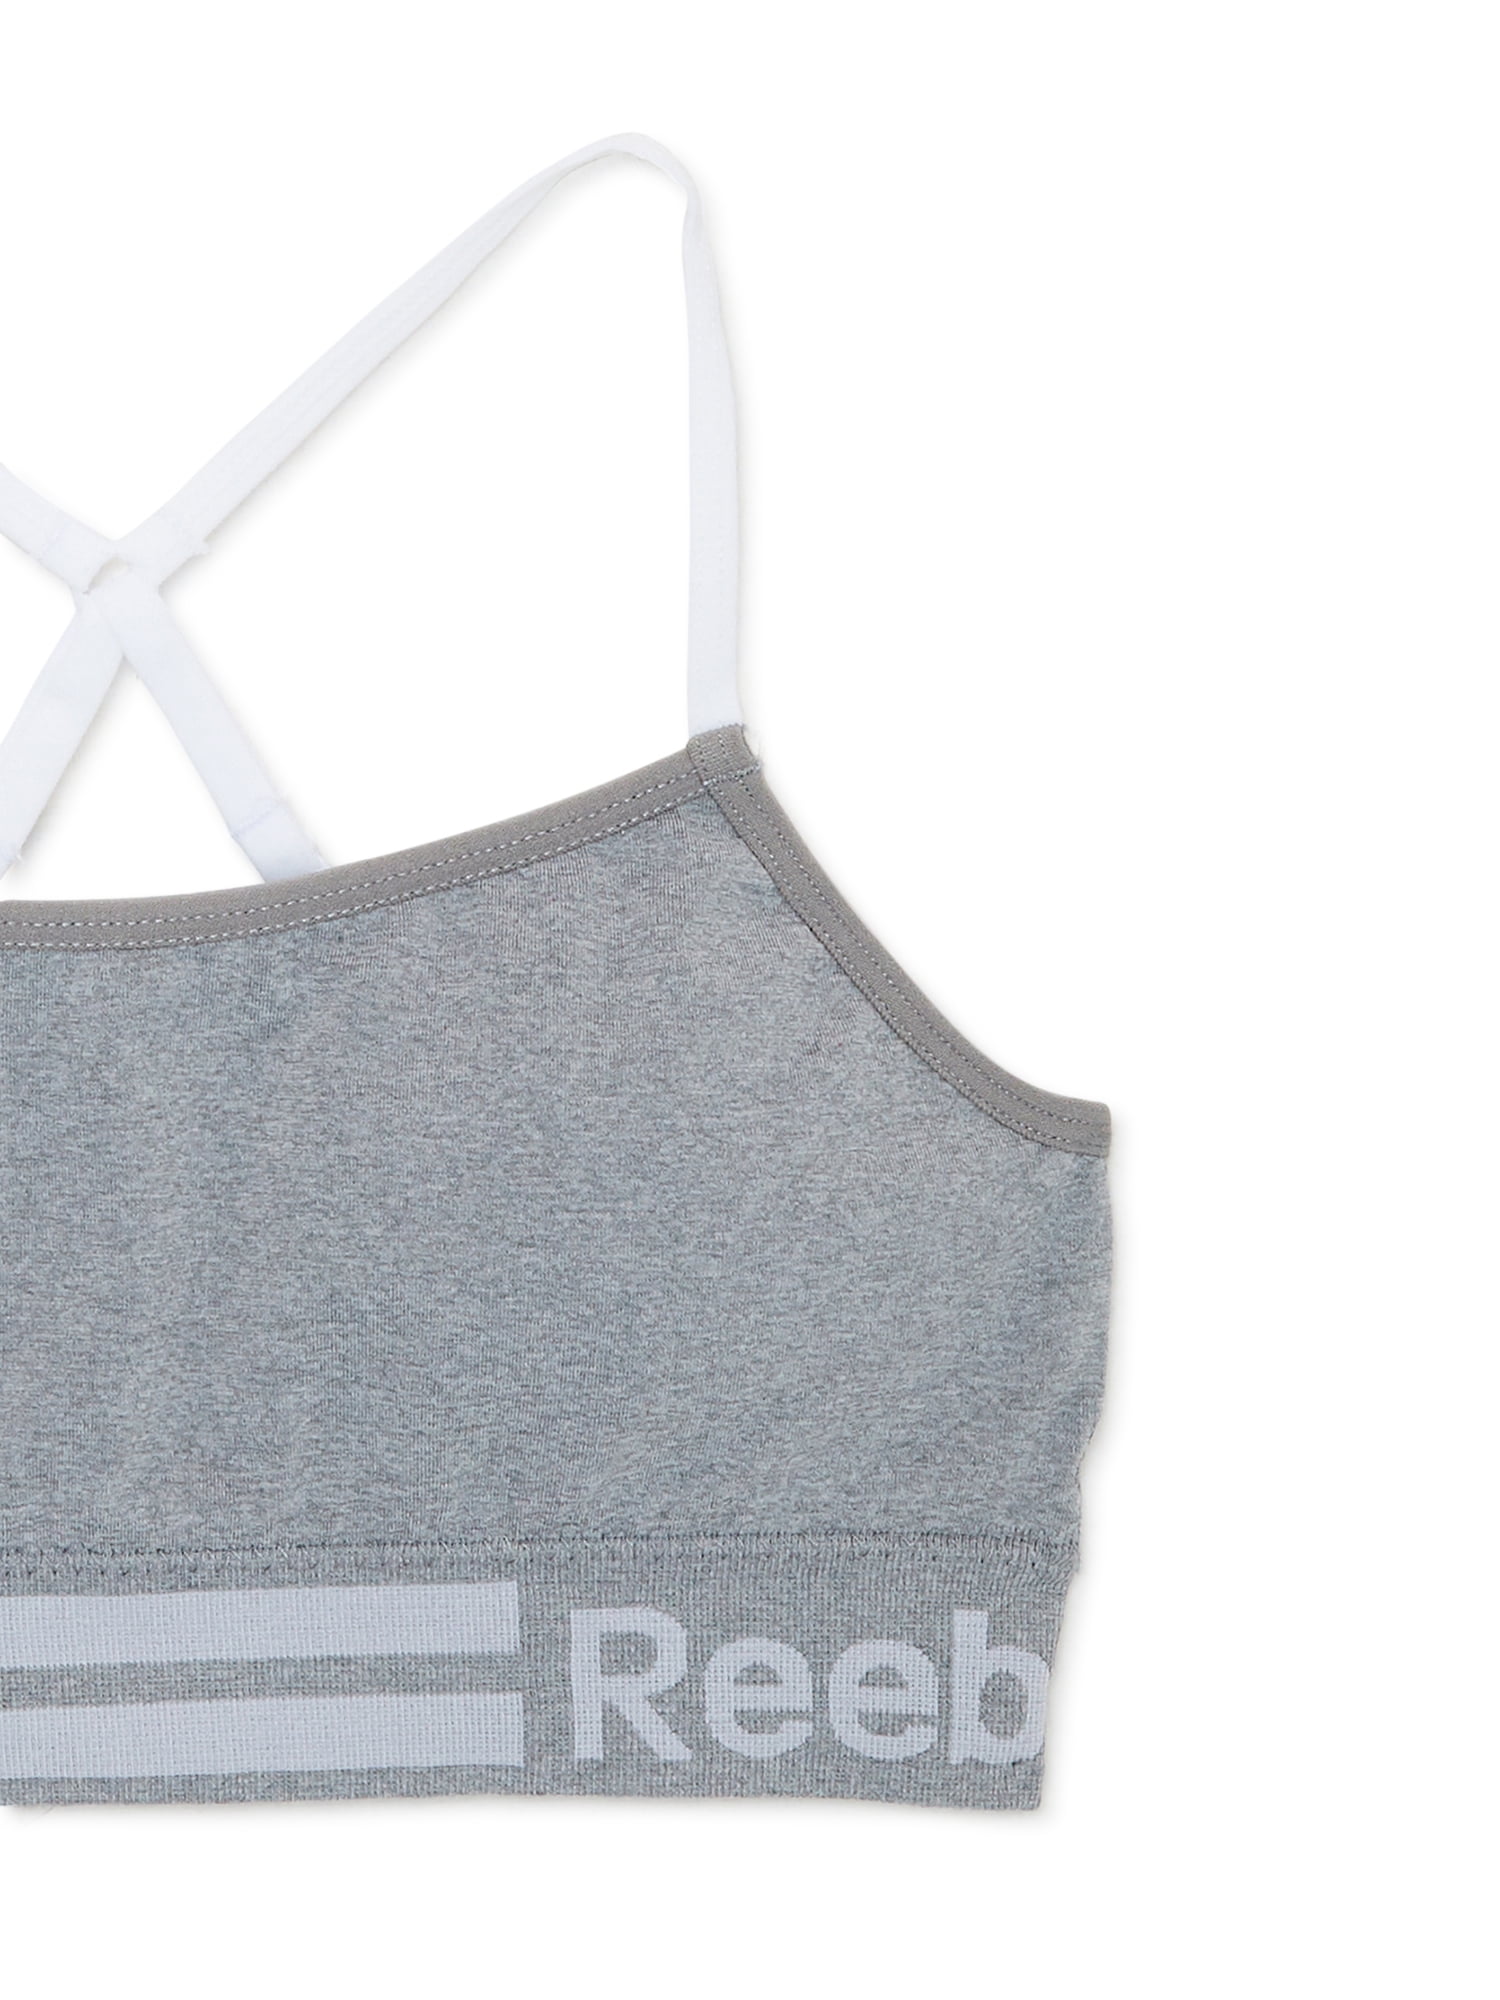 Reebok Women's Seamless Sports Bralette 2-Pack only $17 shipped!